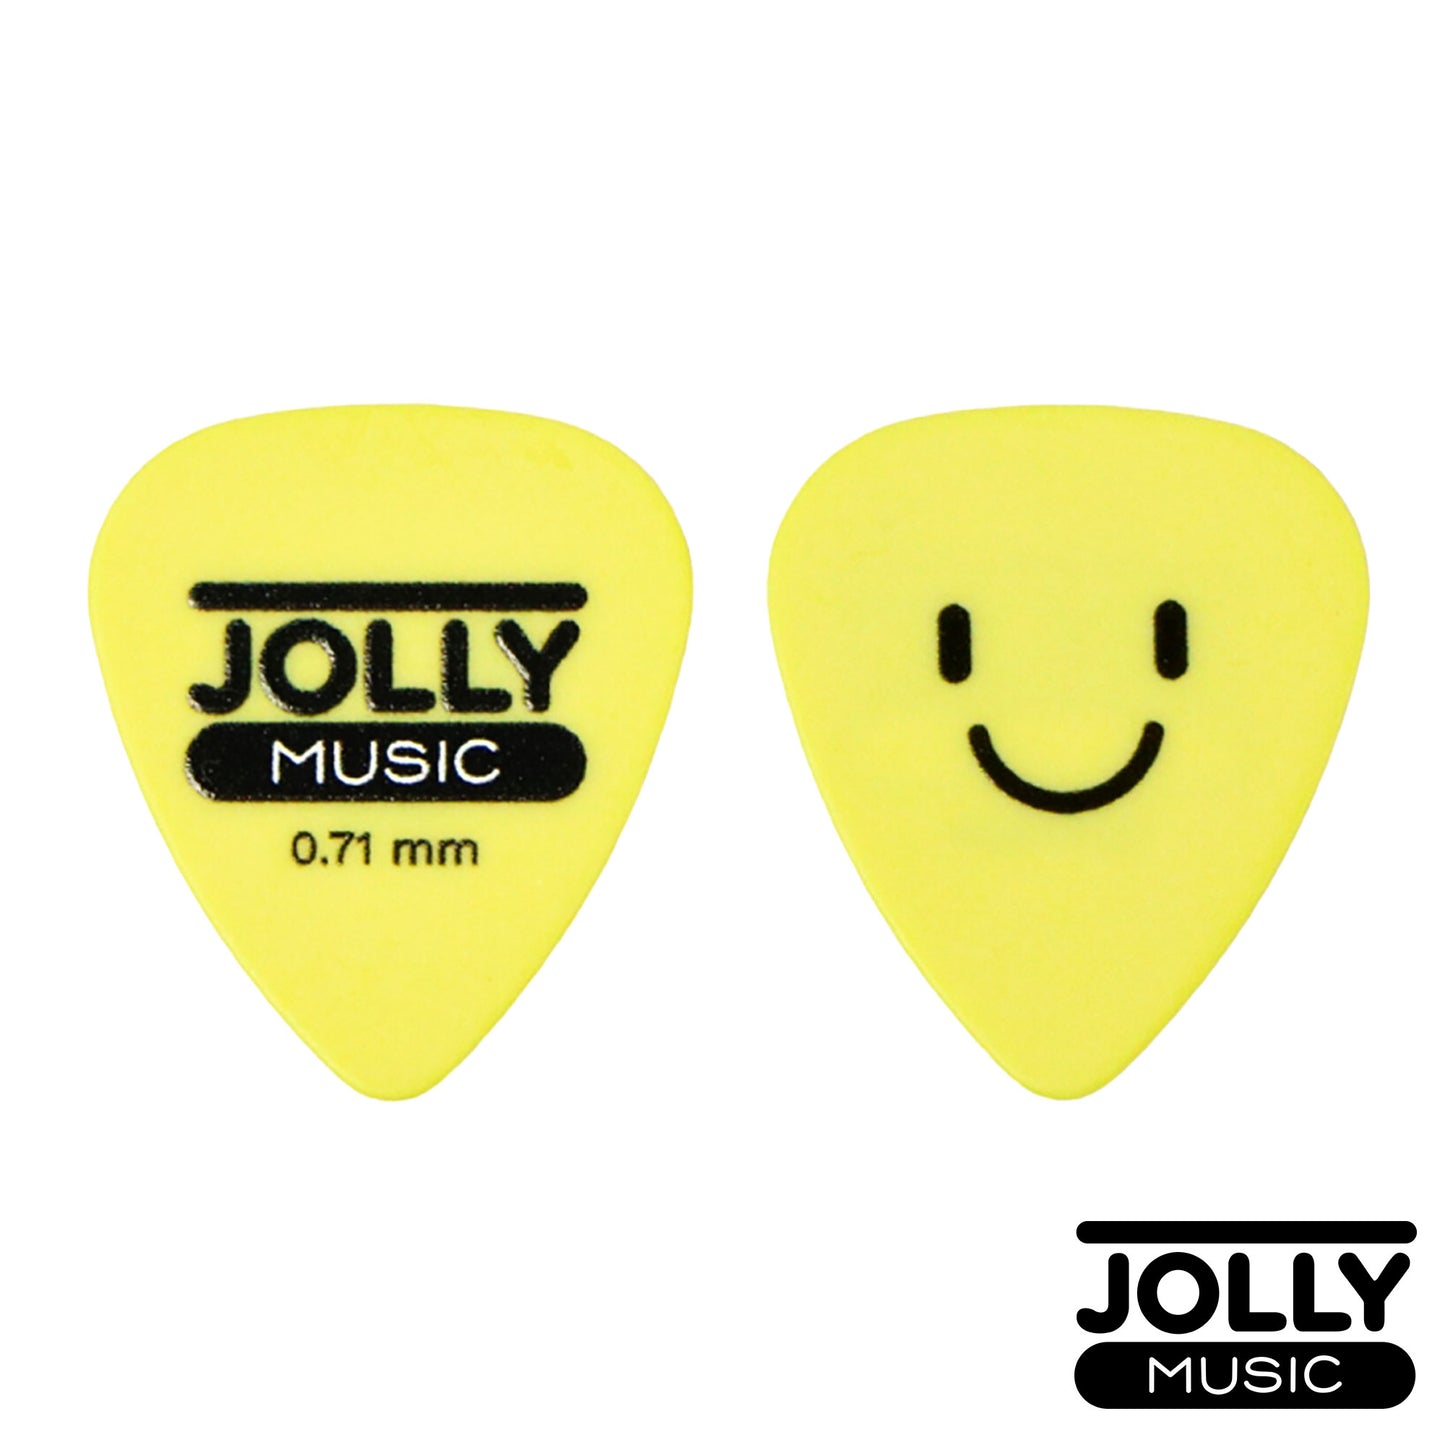 Jolly Music Collectible Guitar Pick Tin Set 12 pcs SURPRISE SMILEY DESIGN